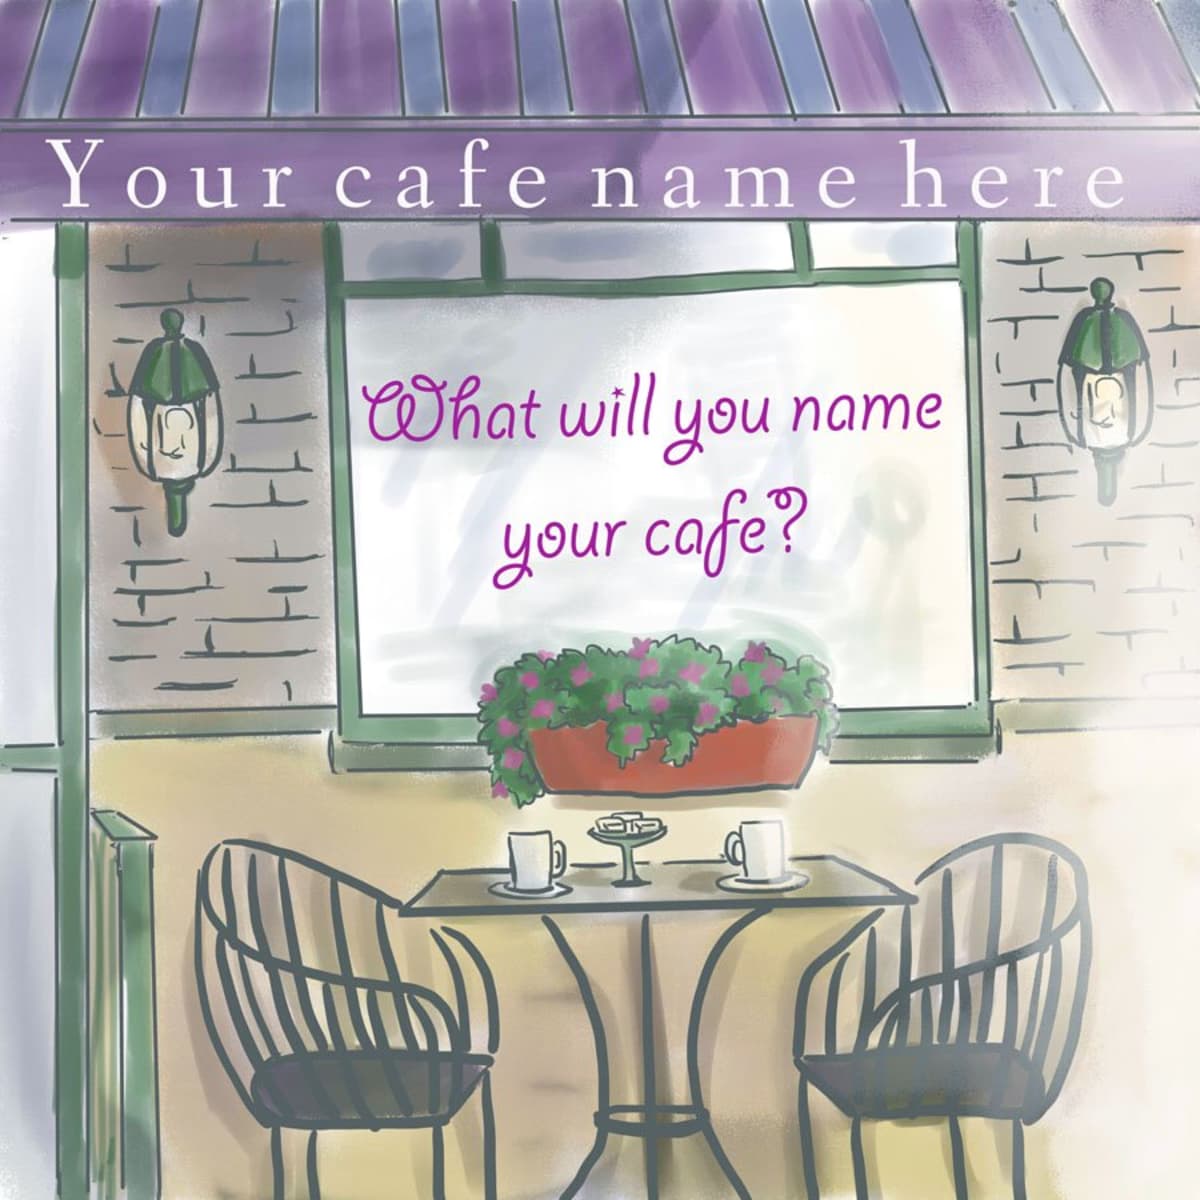 45 Creative Coffee Shop and Cafe Names - Delishably